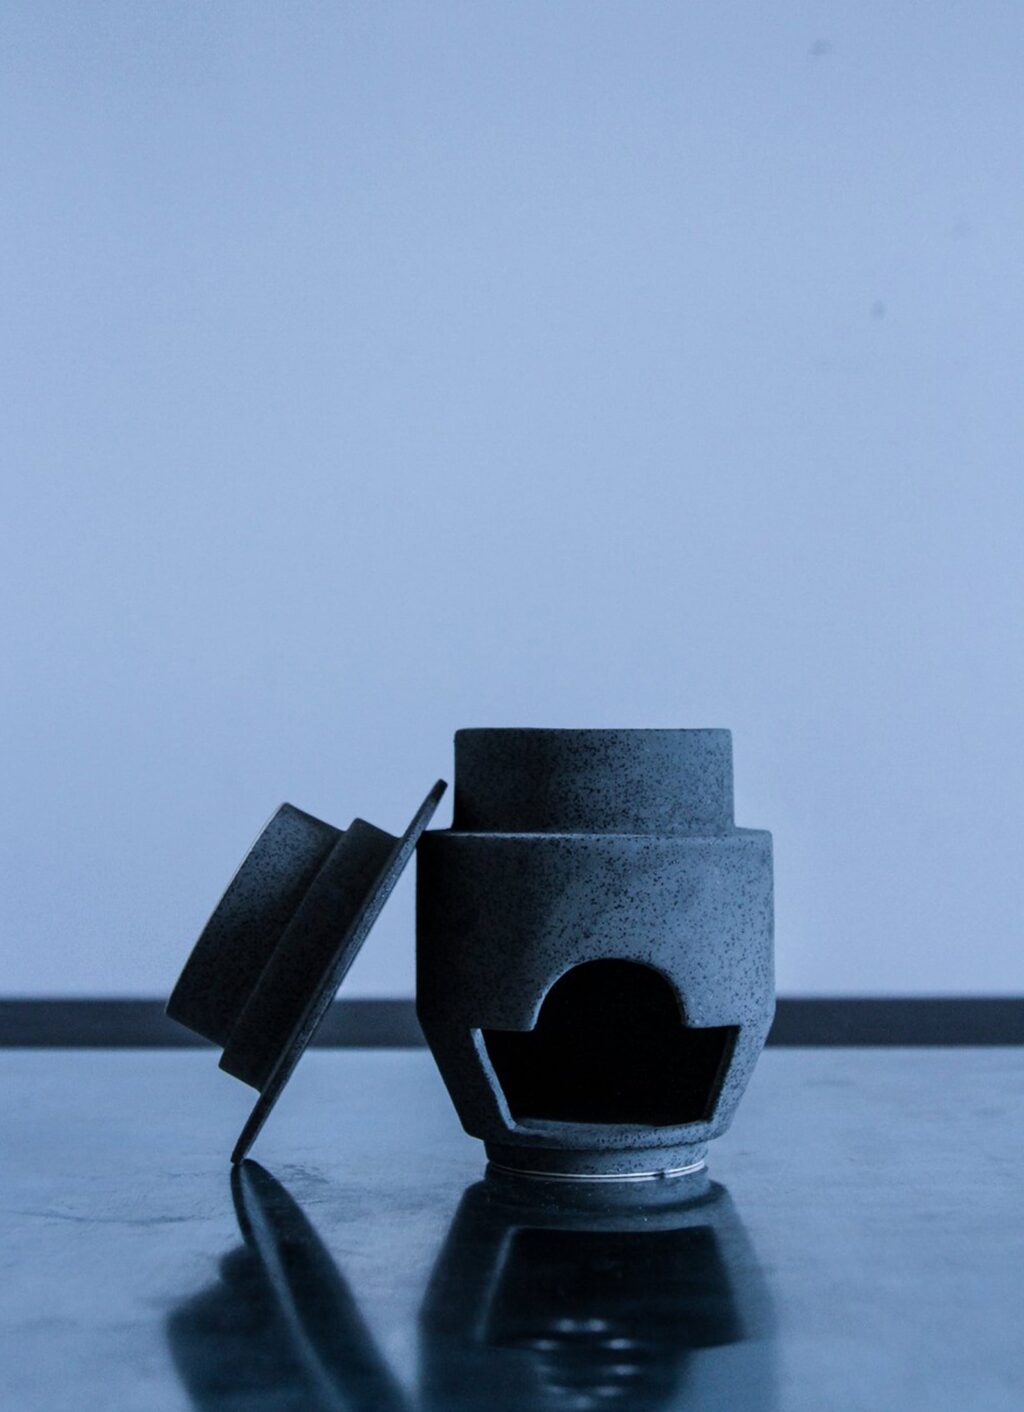 Aoiro Studio - Moon Essence Burner - Ceramic Object in a Kiribako Box from Kanazawa